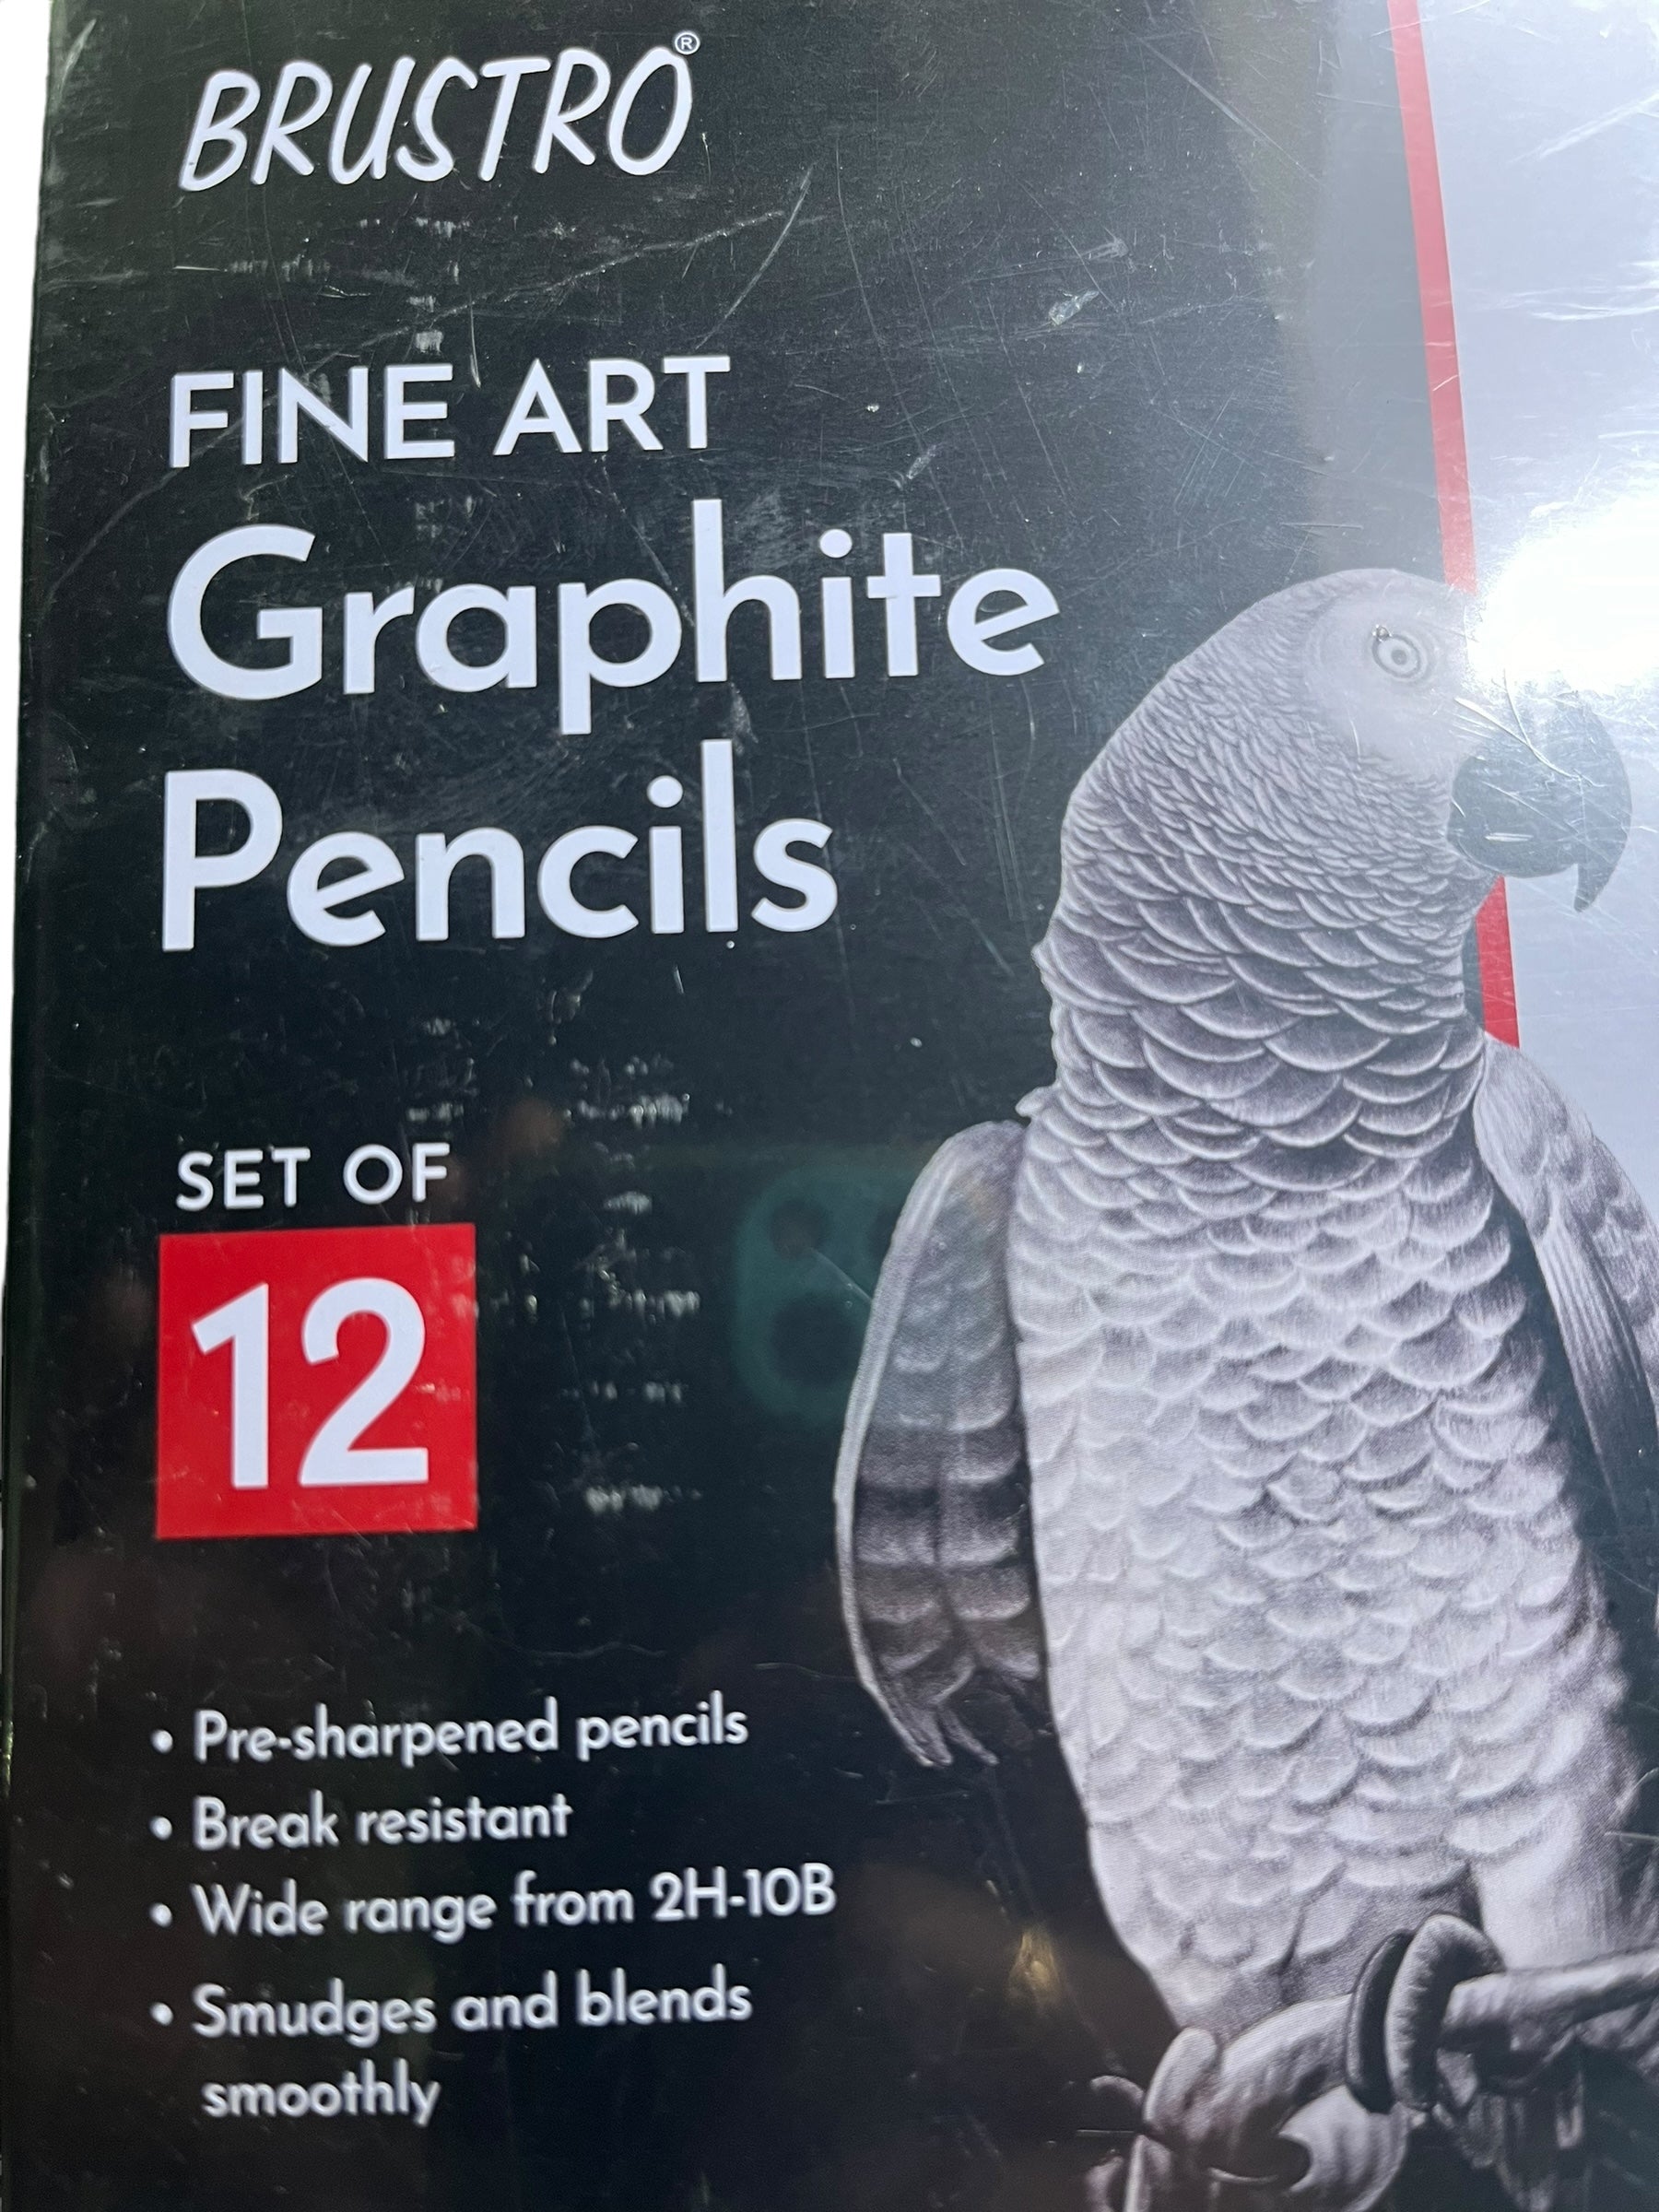 Brustro Fine Art Graphite pencils